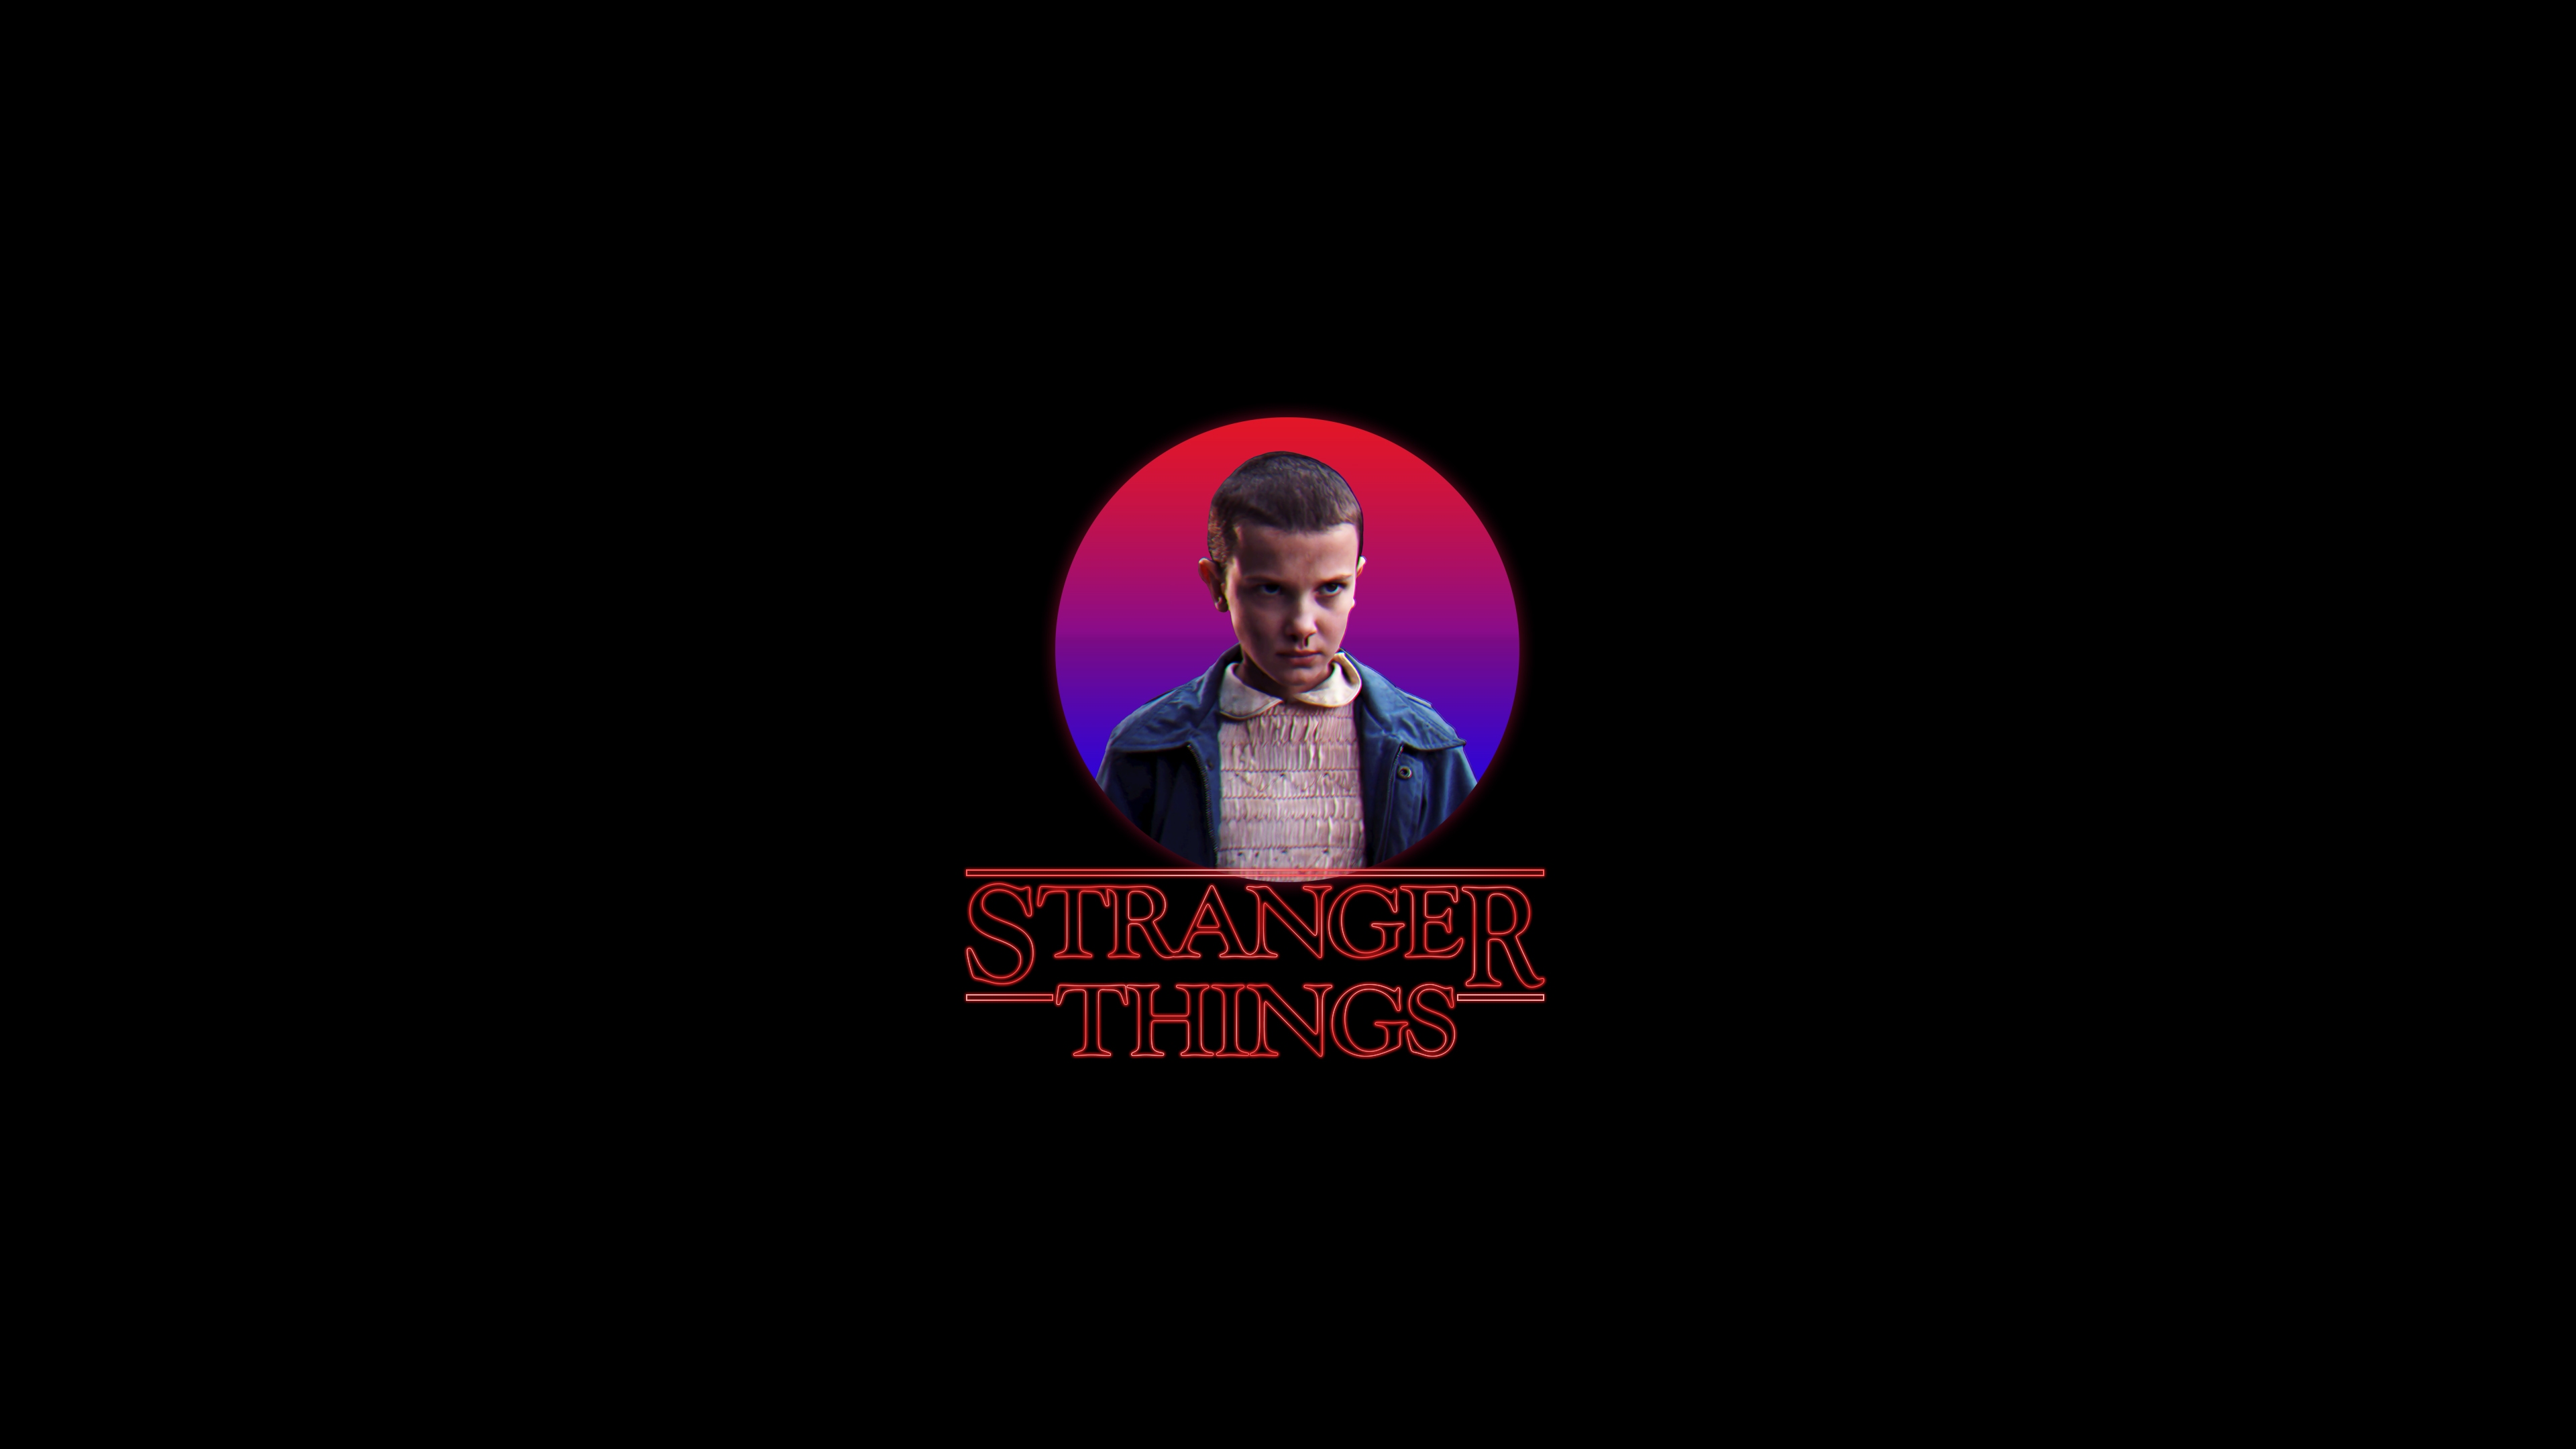 Stranger Things [TV Series] Wallpaper HD 3840x2160